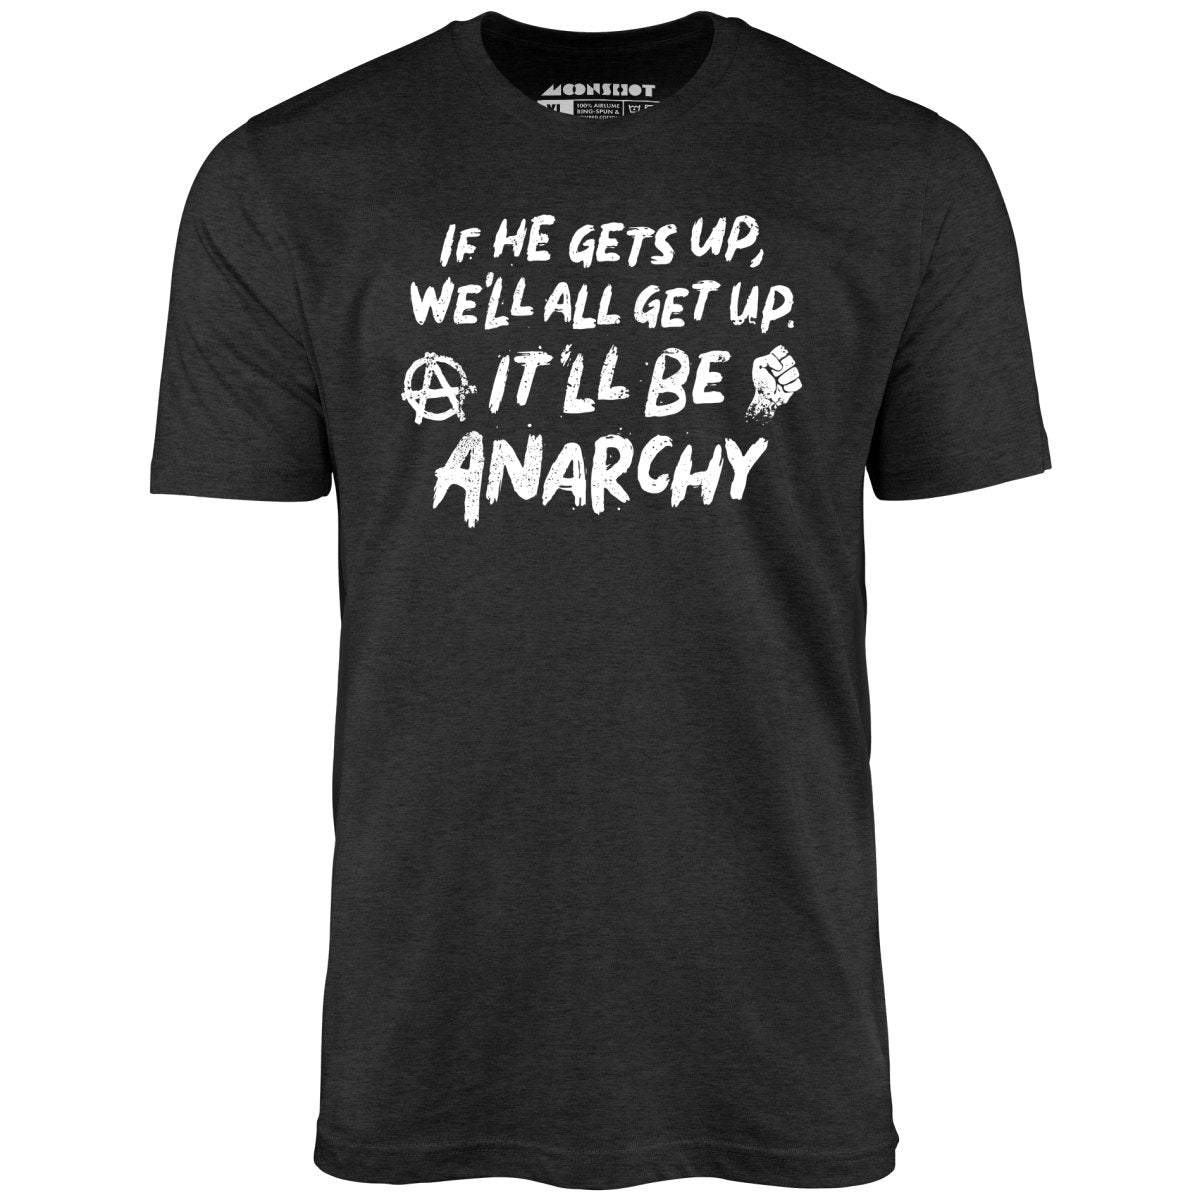 It'll Be Anarchy - Unisex T-Shirt